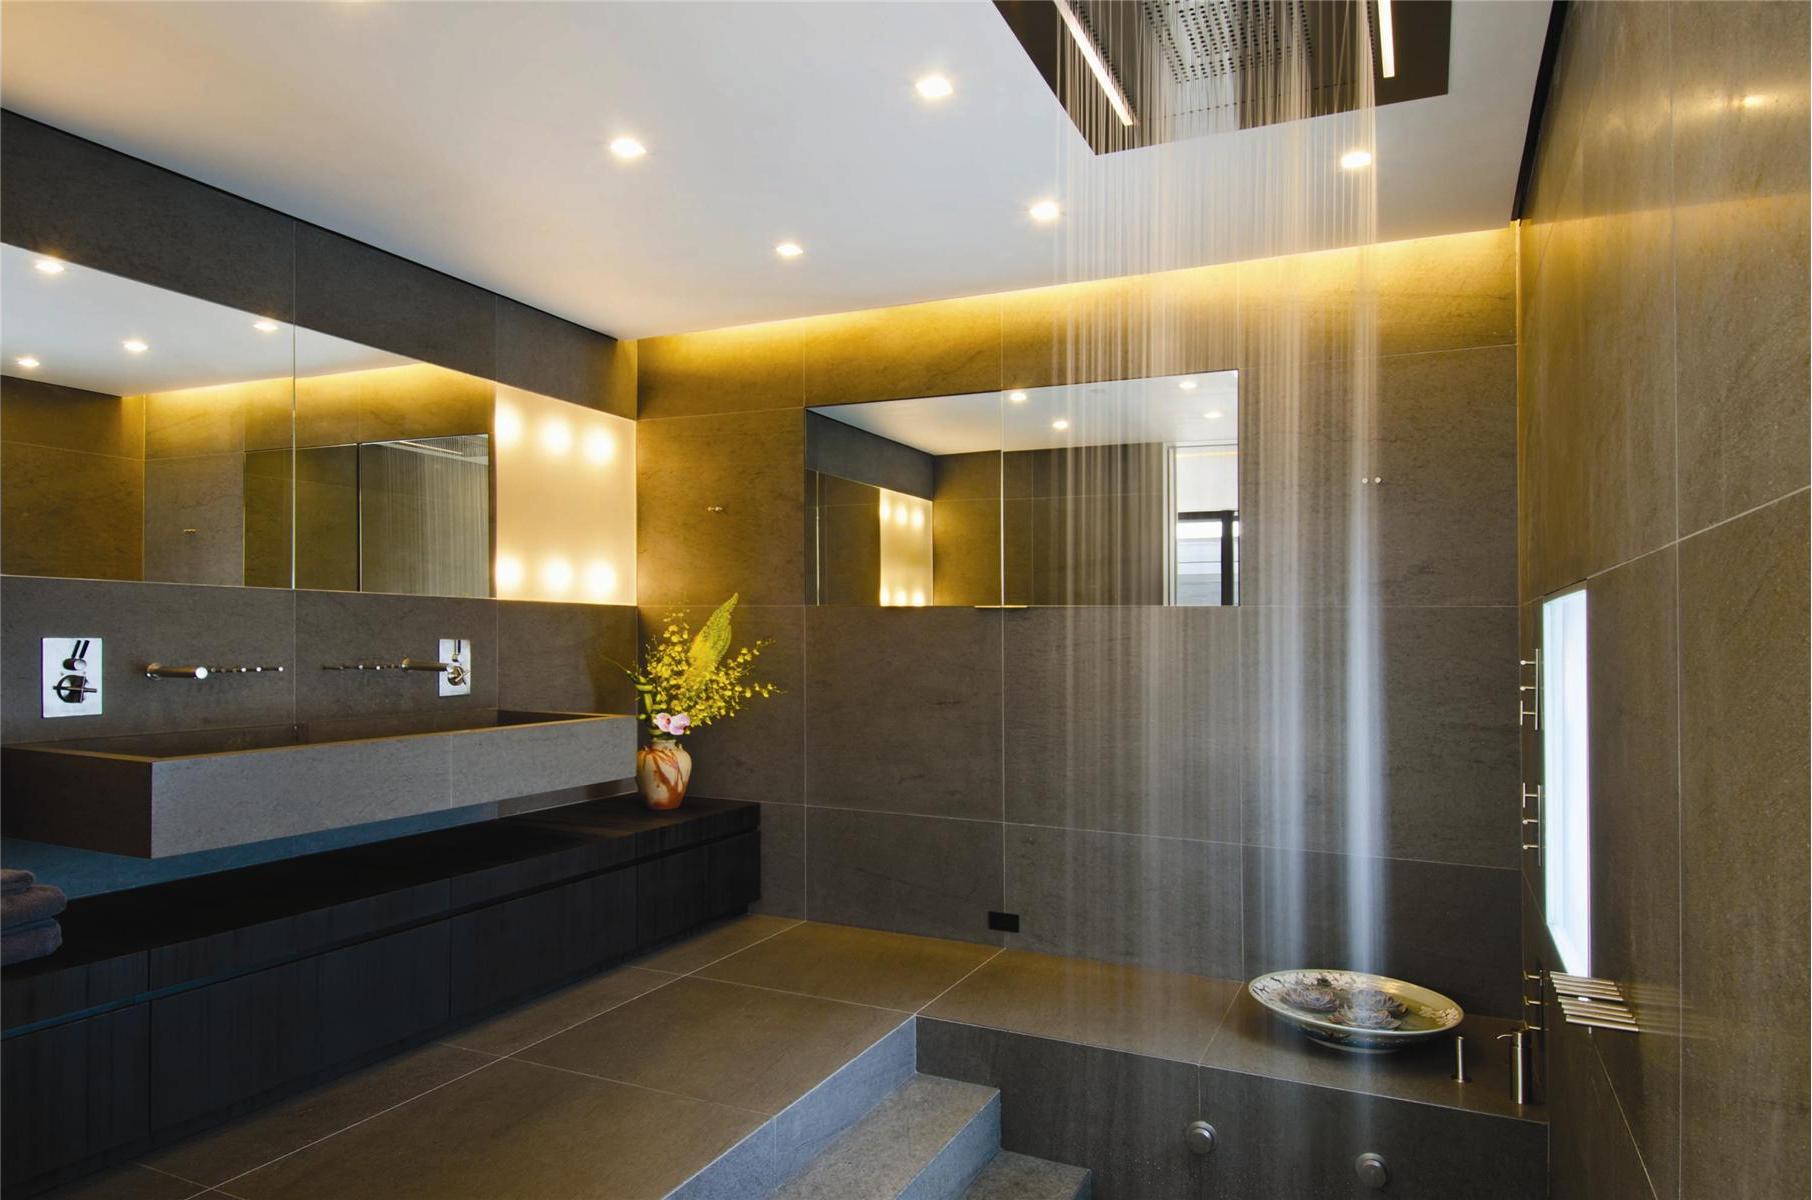 Rainfall Shower Long Futuristic Rainfall Shower Design Also Long Wall Hung Sink For Two Idea And Modern Bathroom Lighting Bathroom Modern Bathroom Lighting Ideas In Exceptional Installation